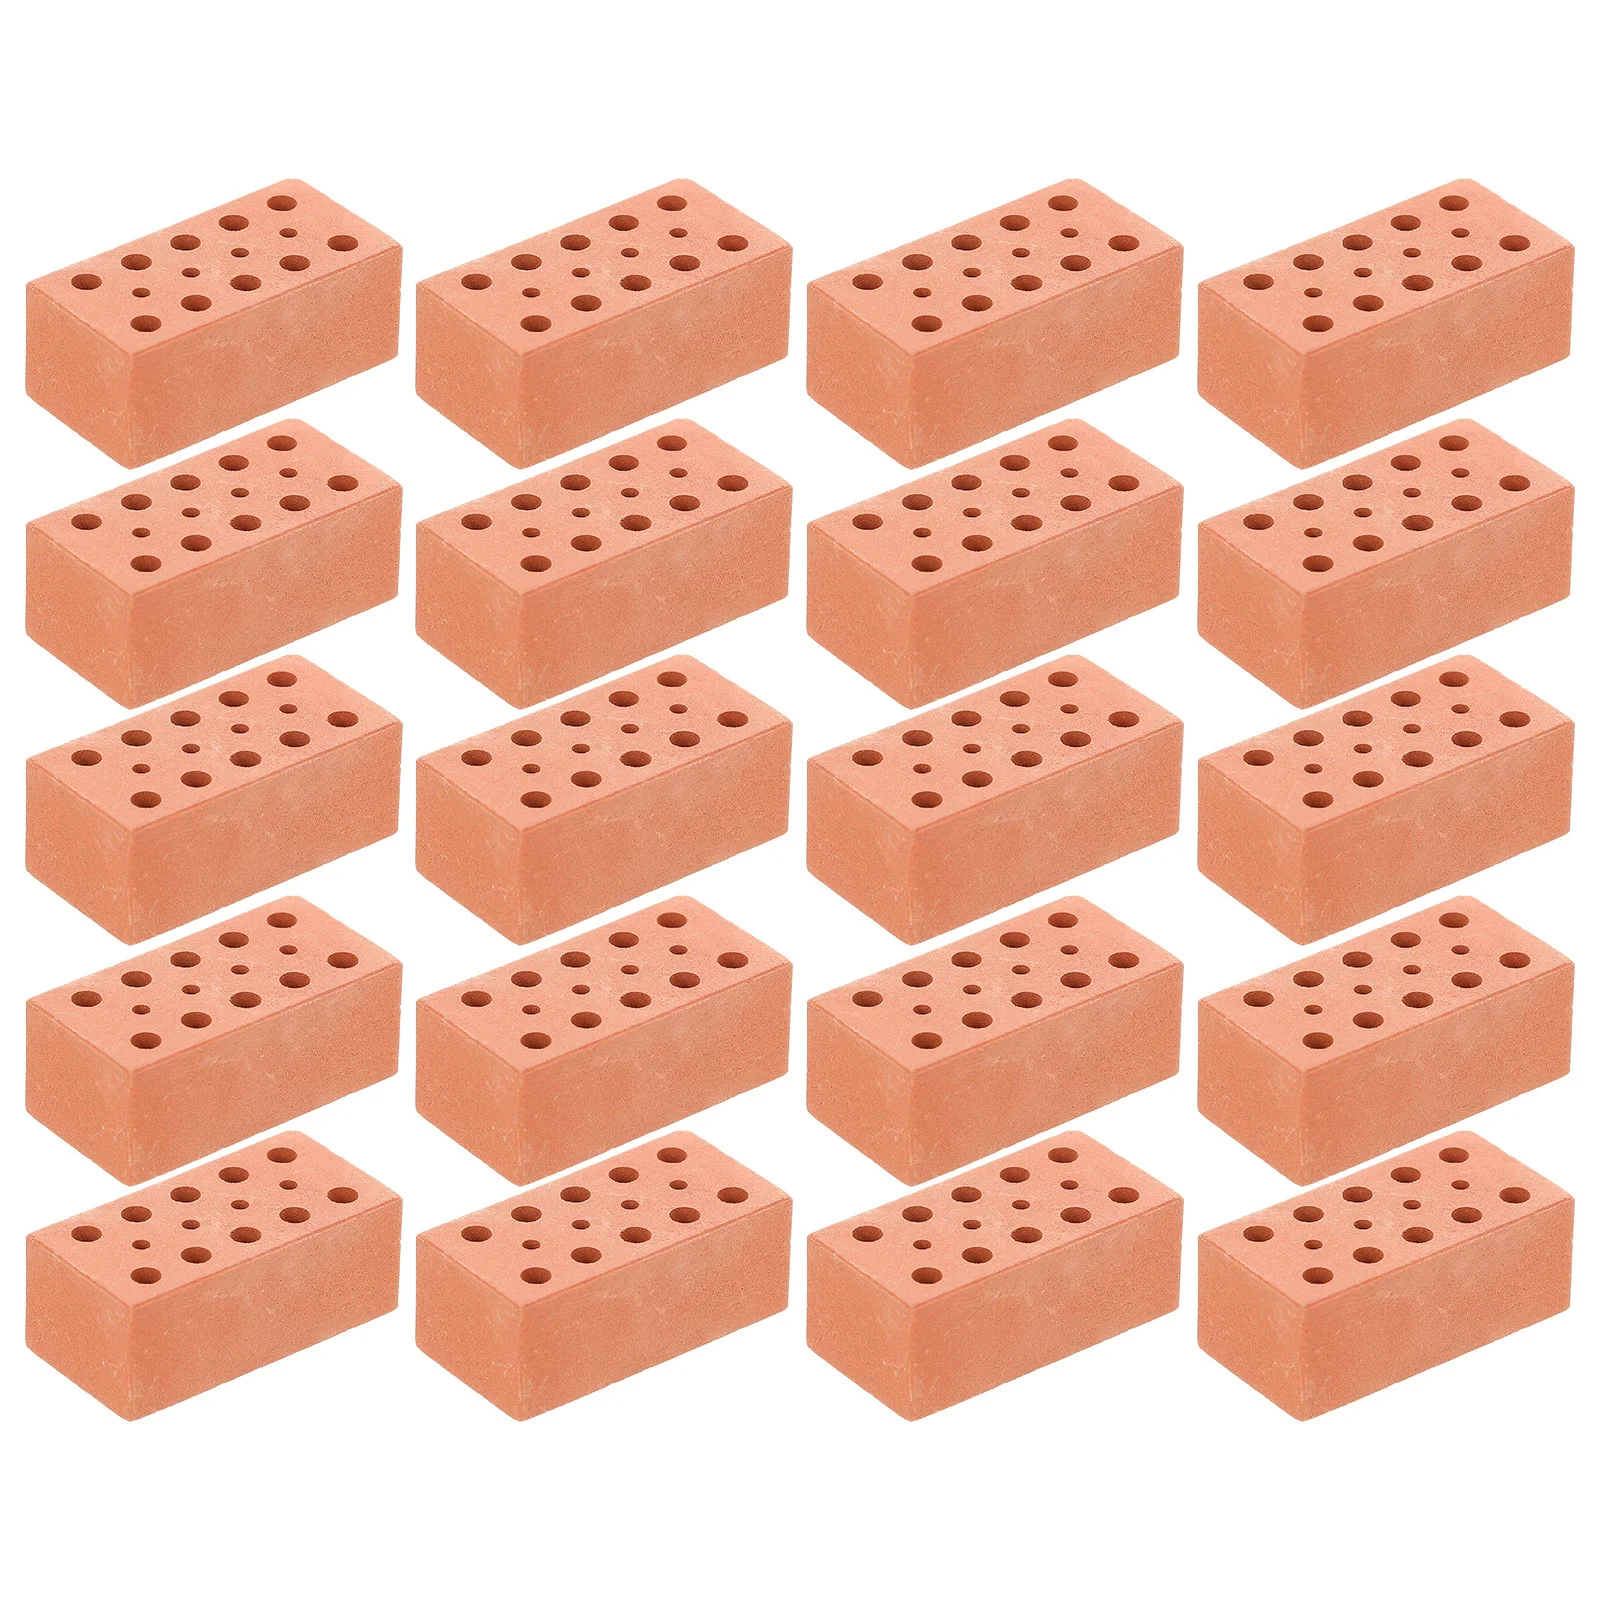 

20 Pcs Simulated Brick Miniature Bricks Models Building Blocks Desk Sand Table Decors Clay DIY Fake Simulation Child